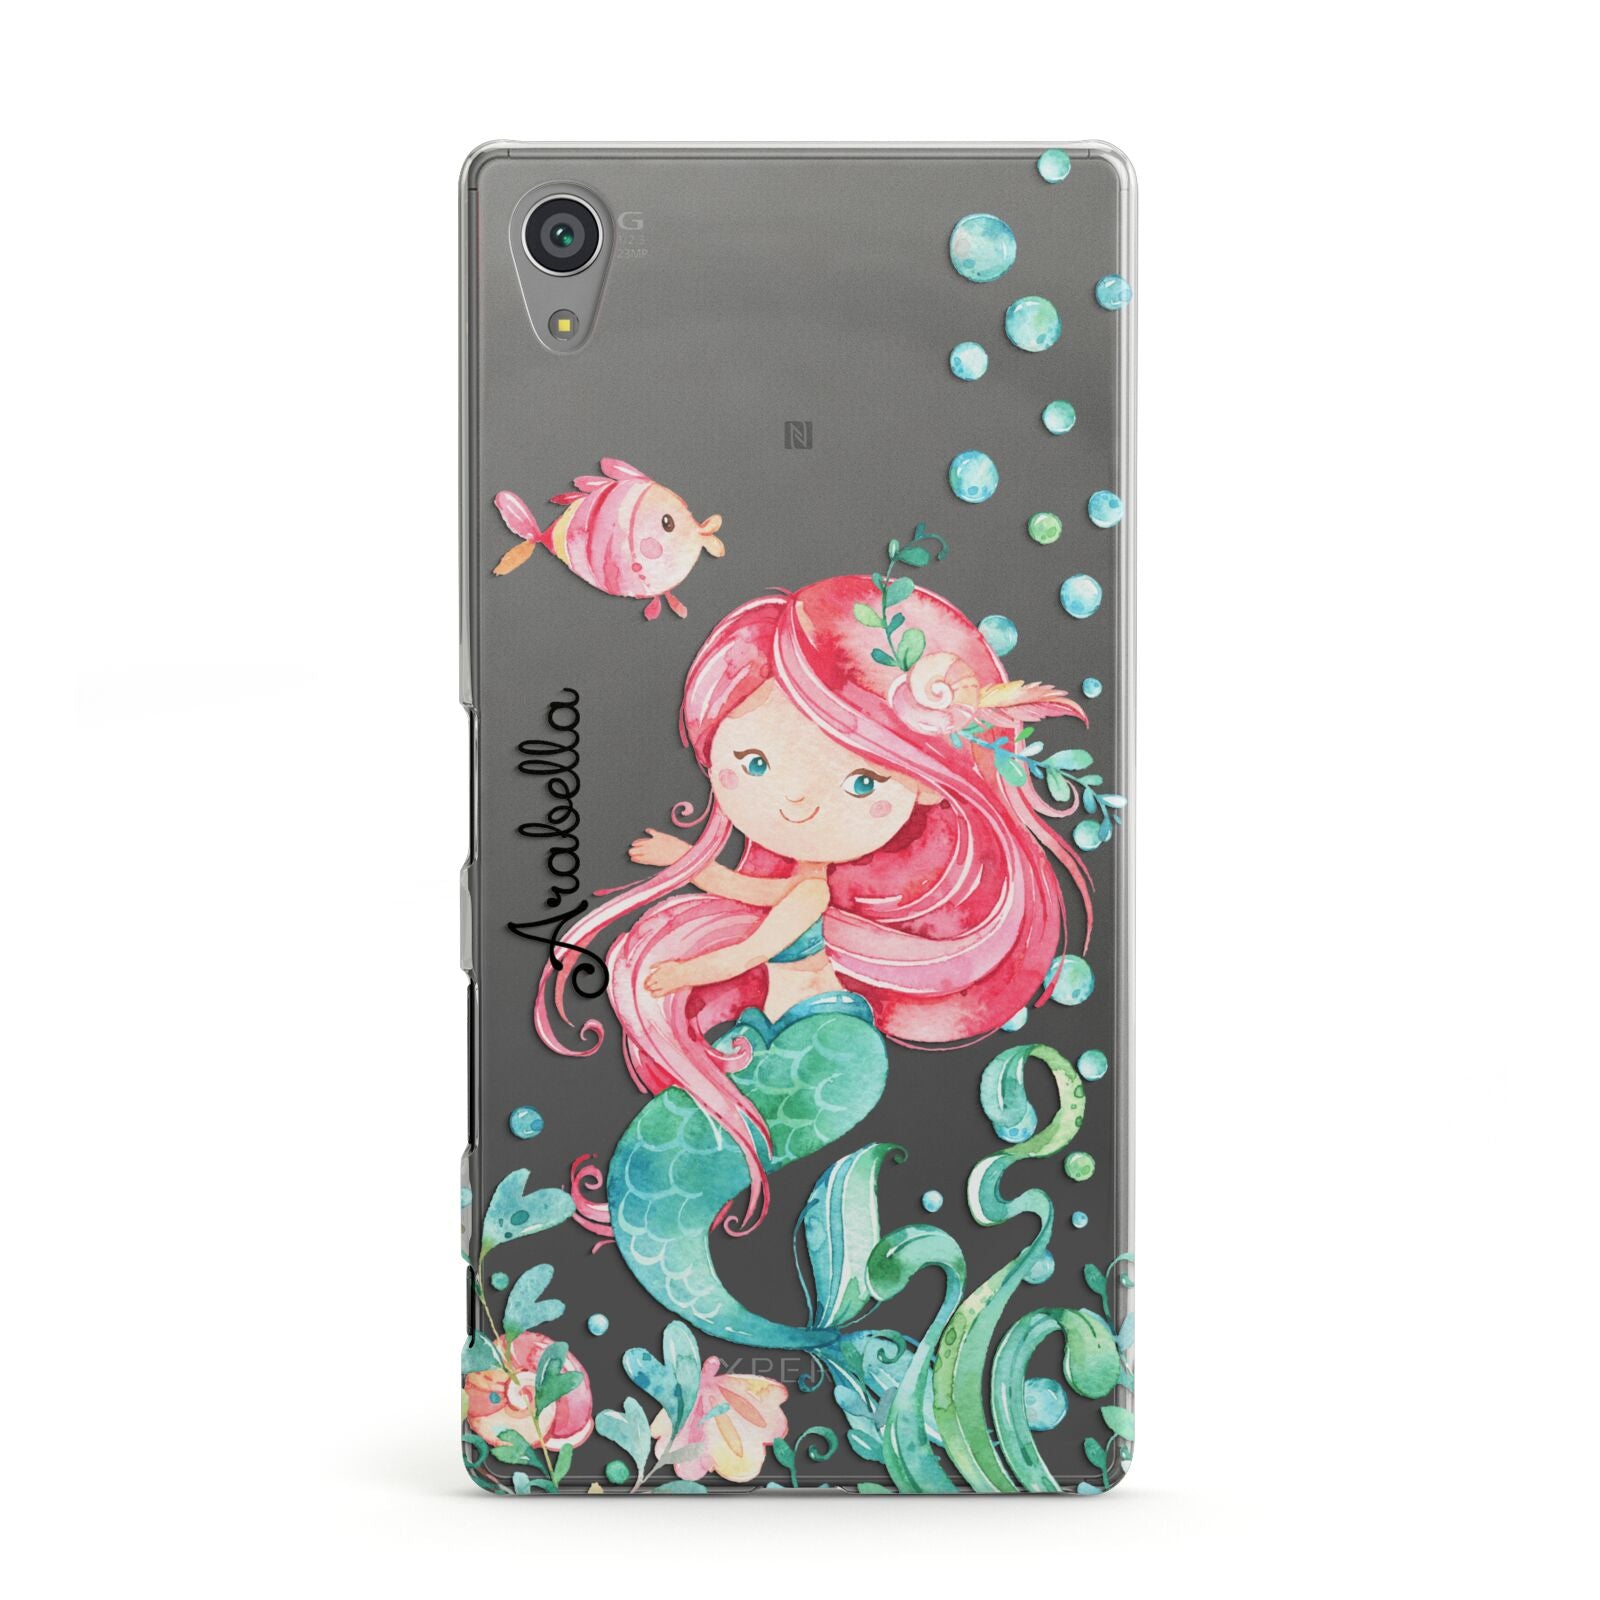 Personalised Mermaid Sony Xperia Case